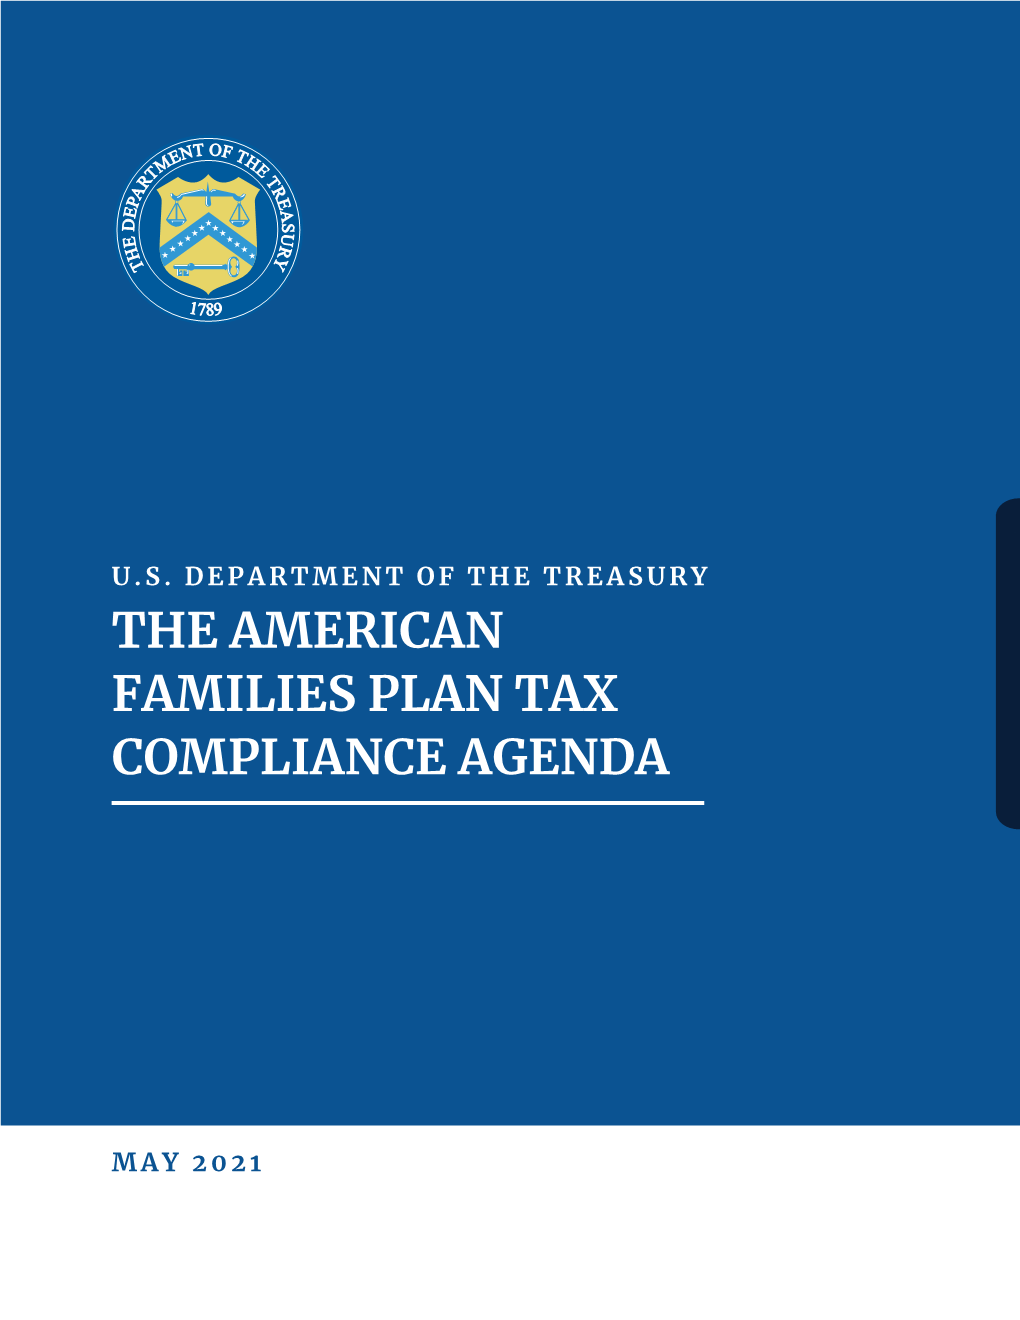 The American Families Plan Tax Compliance Agenda